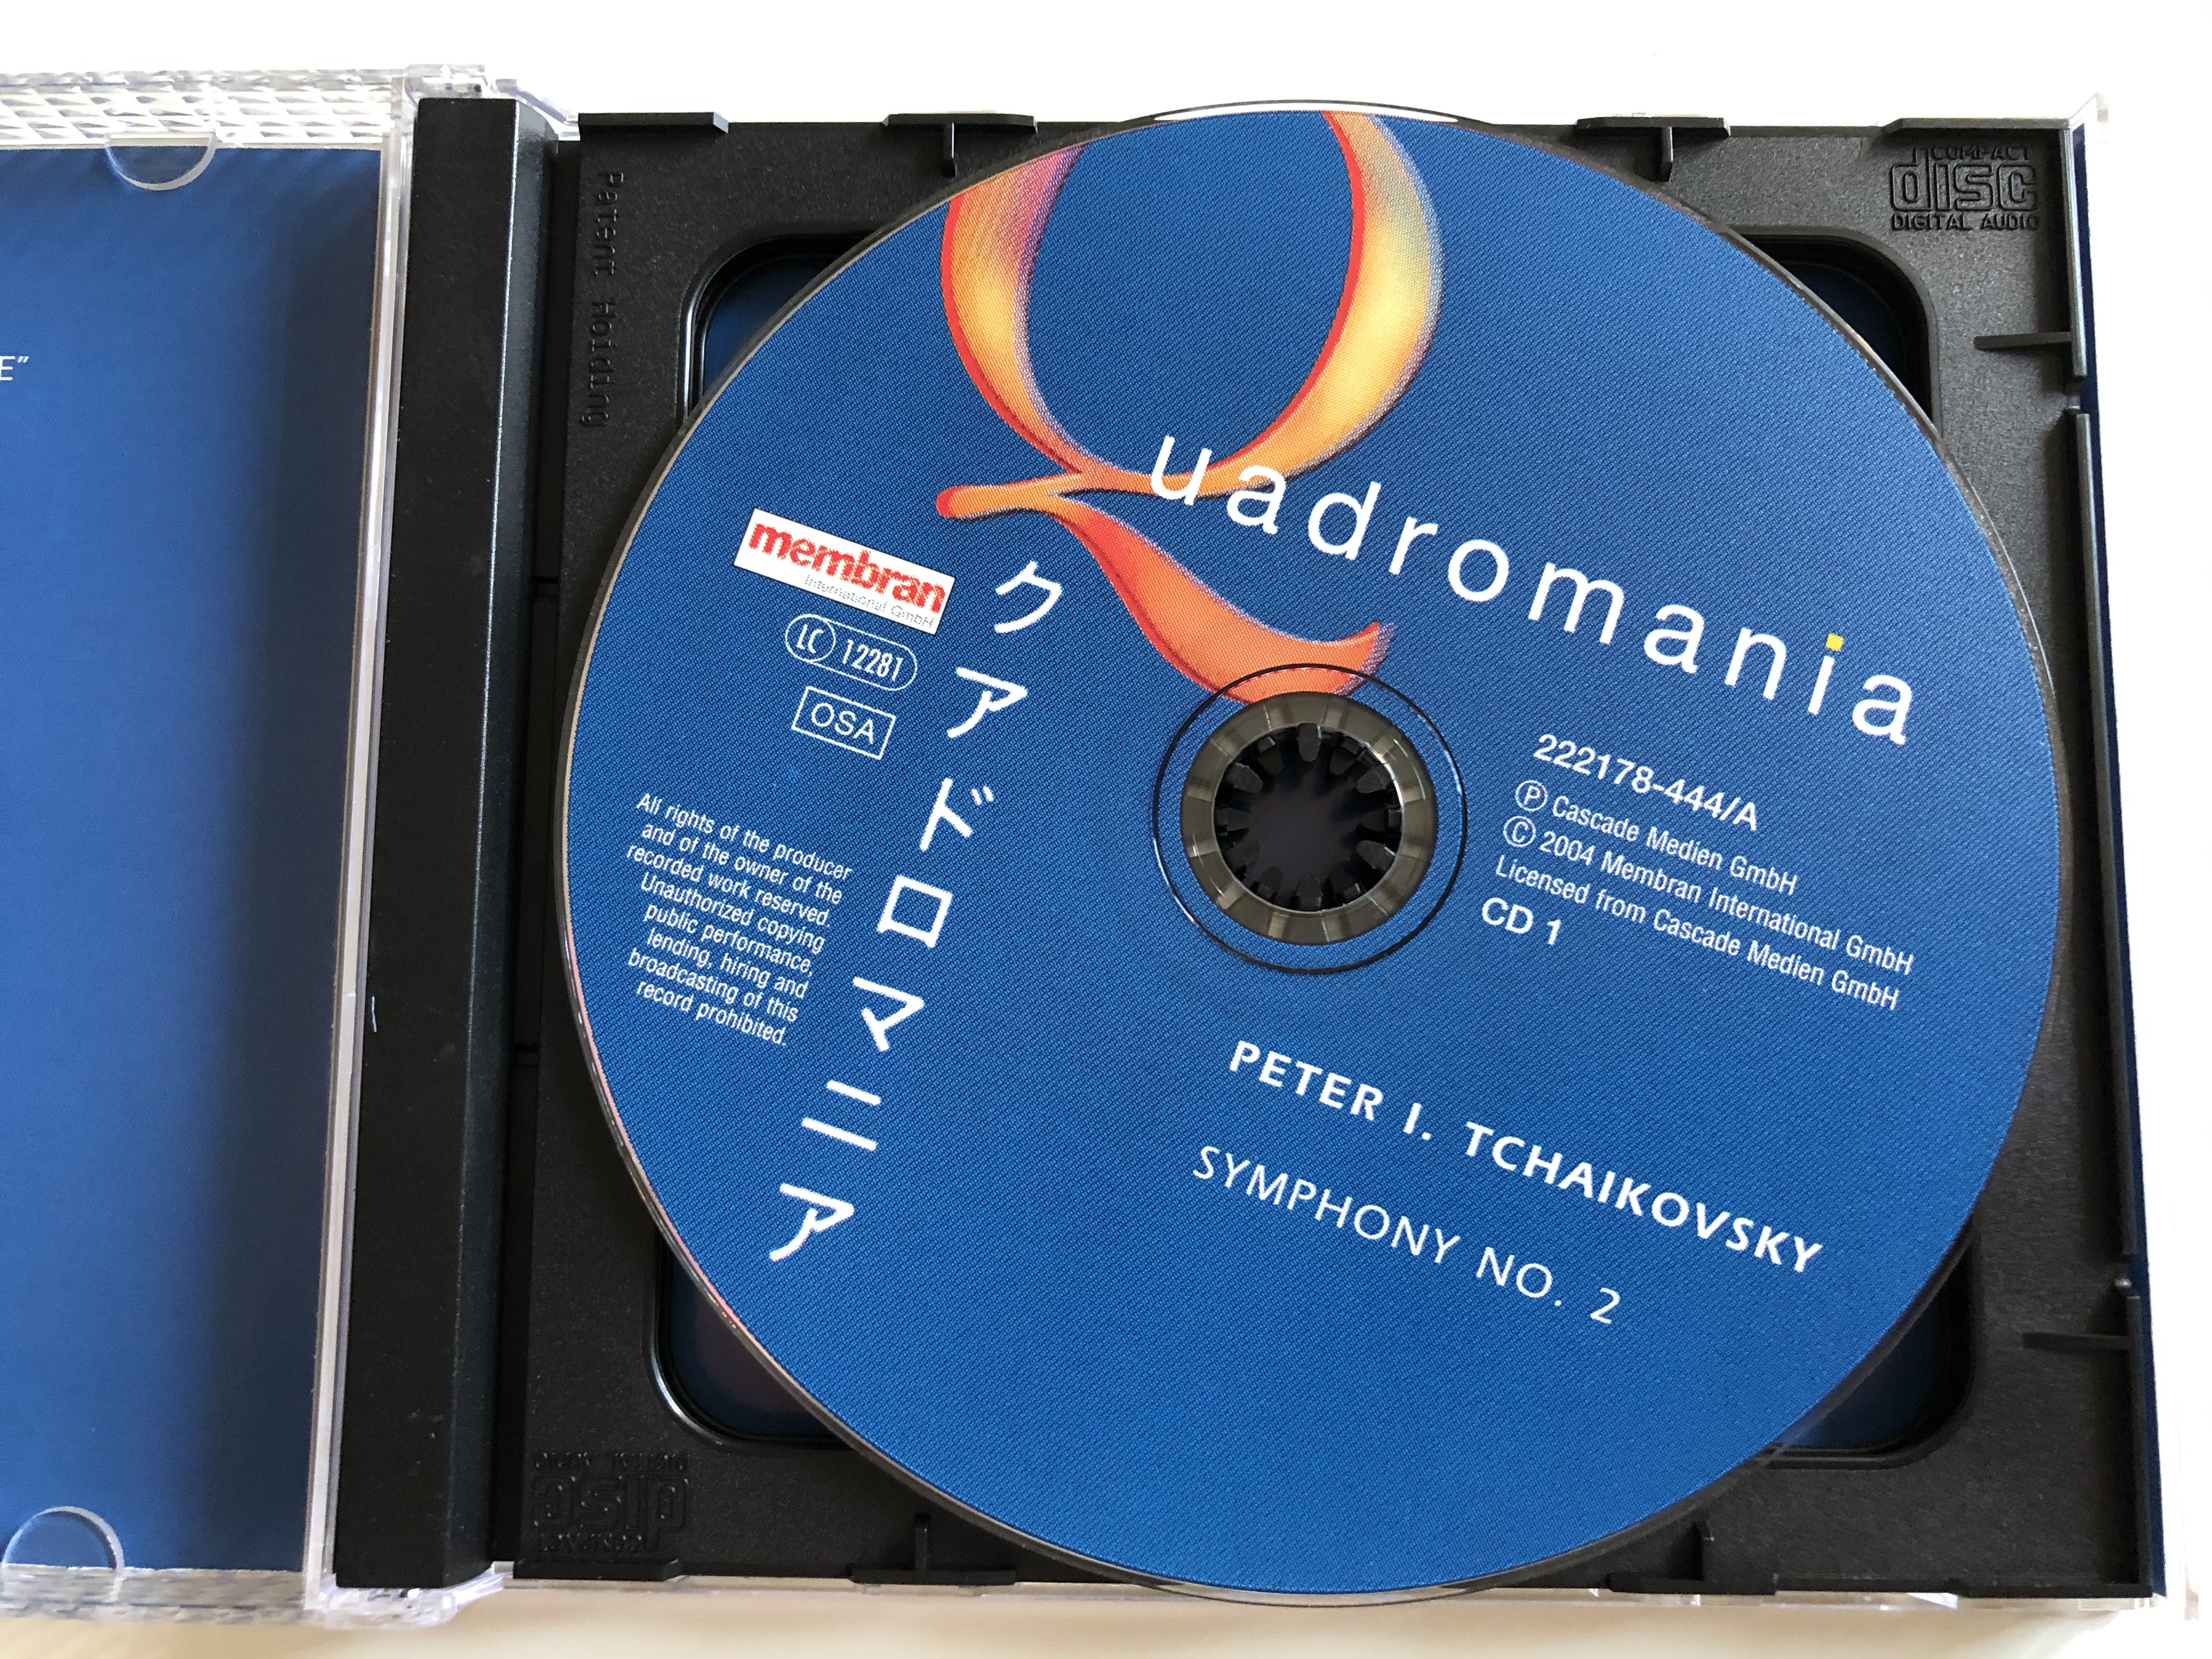 quadromania-4-peter-i.-tchaikovsky-symphonies-nos.-2-4-6-quadromania-4x-audio-cd-2004-222178-444-6-.jpg